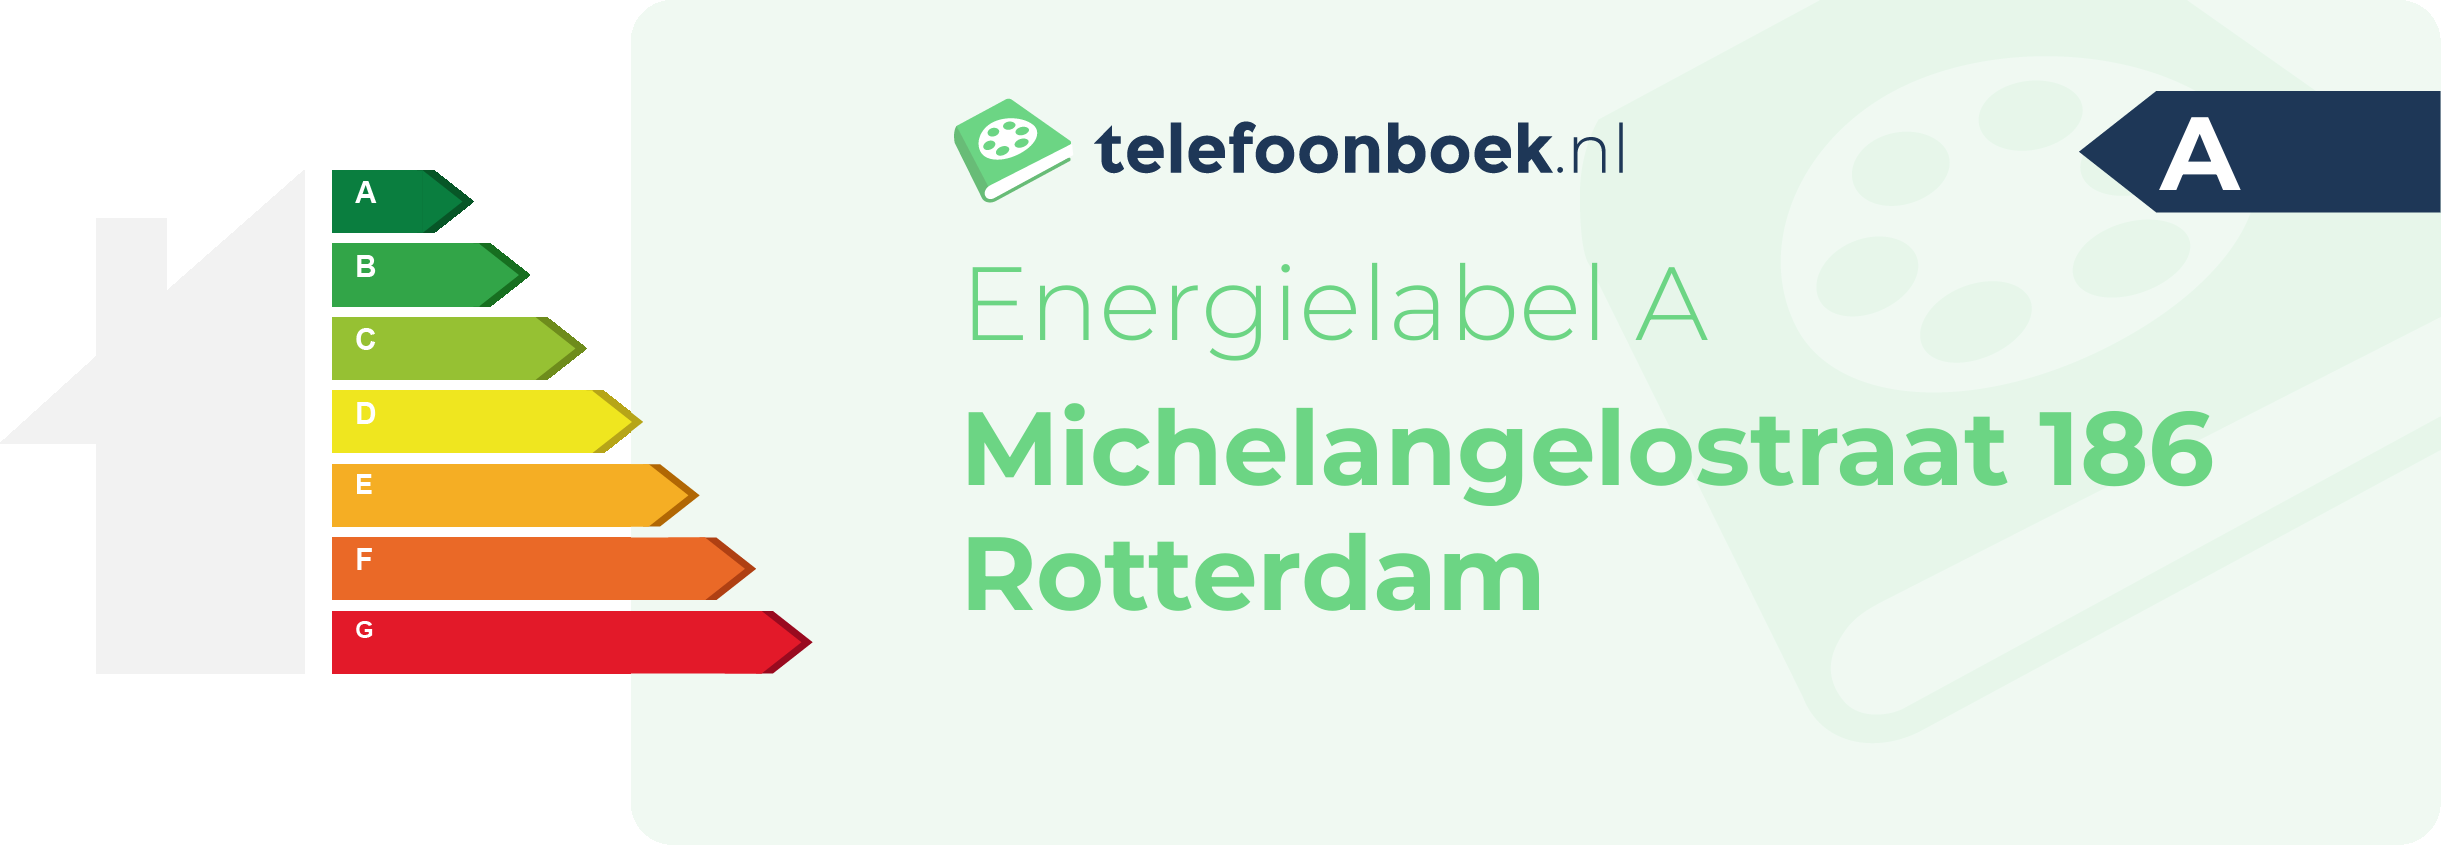 Energielabel Michelangelostraat 186 Rotterdam